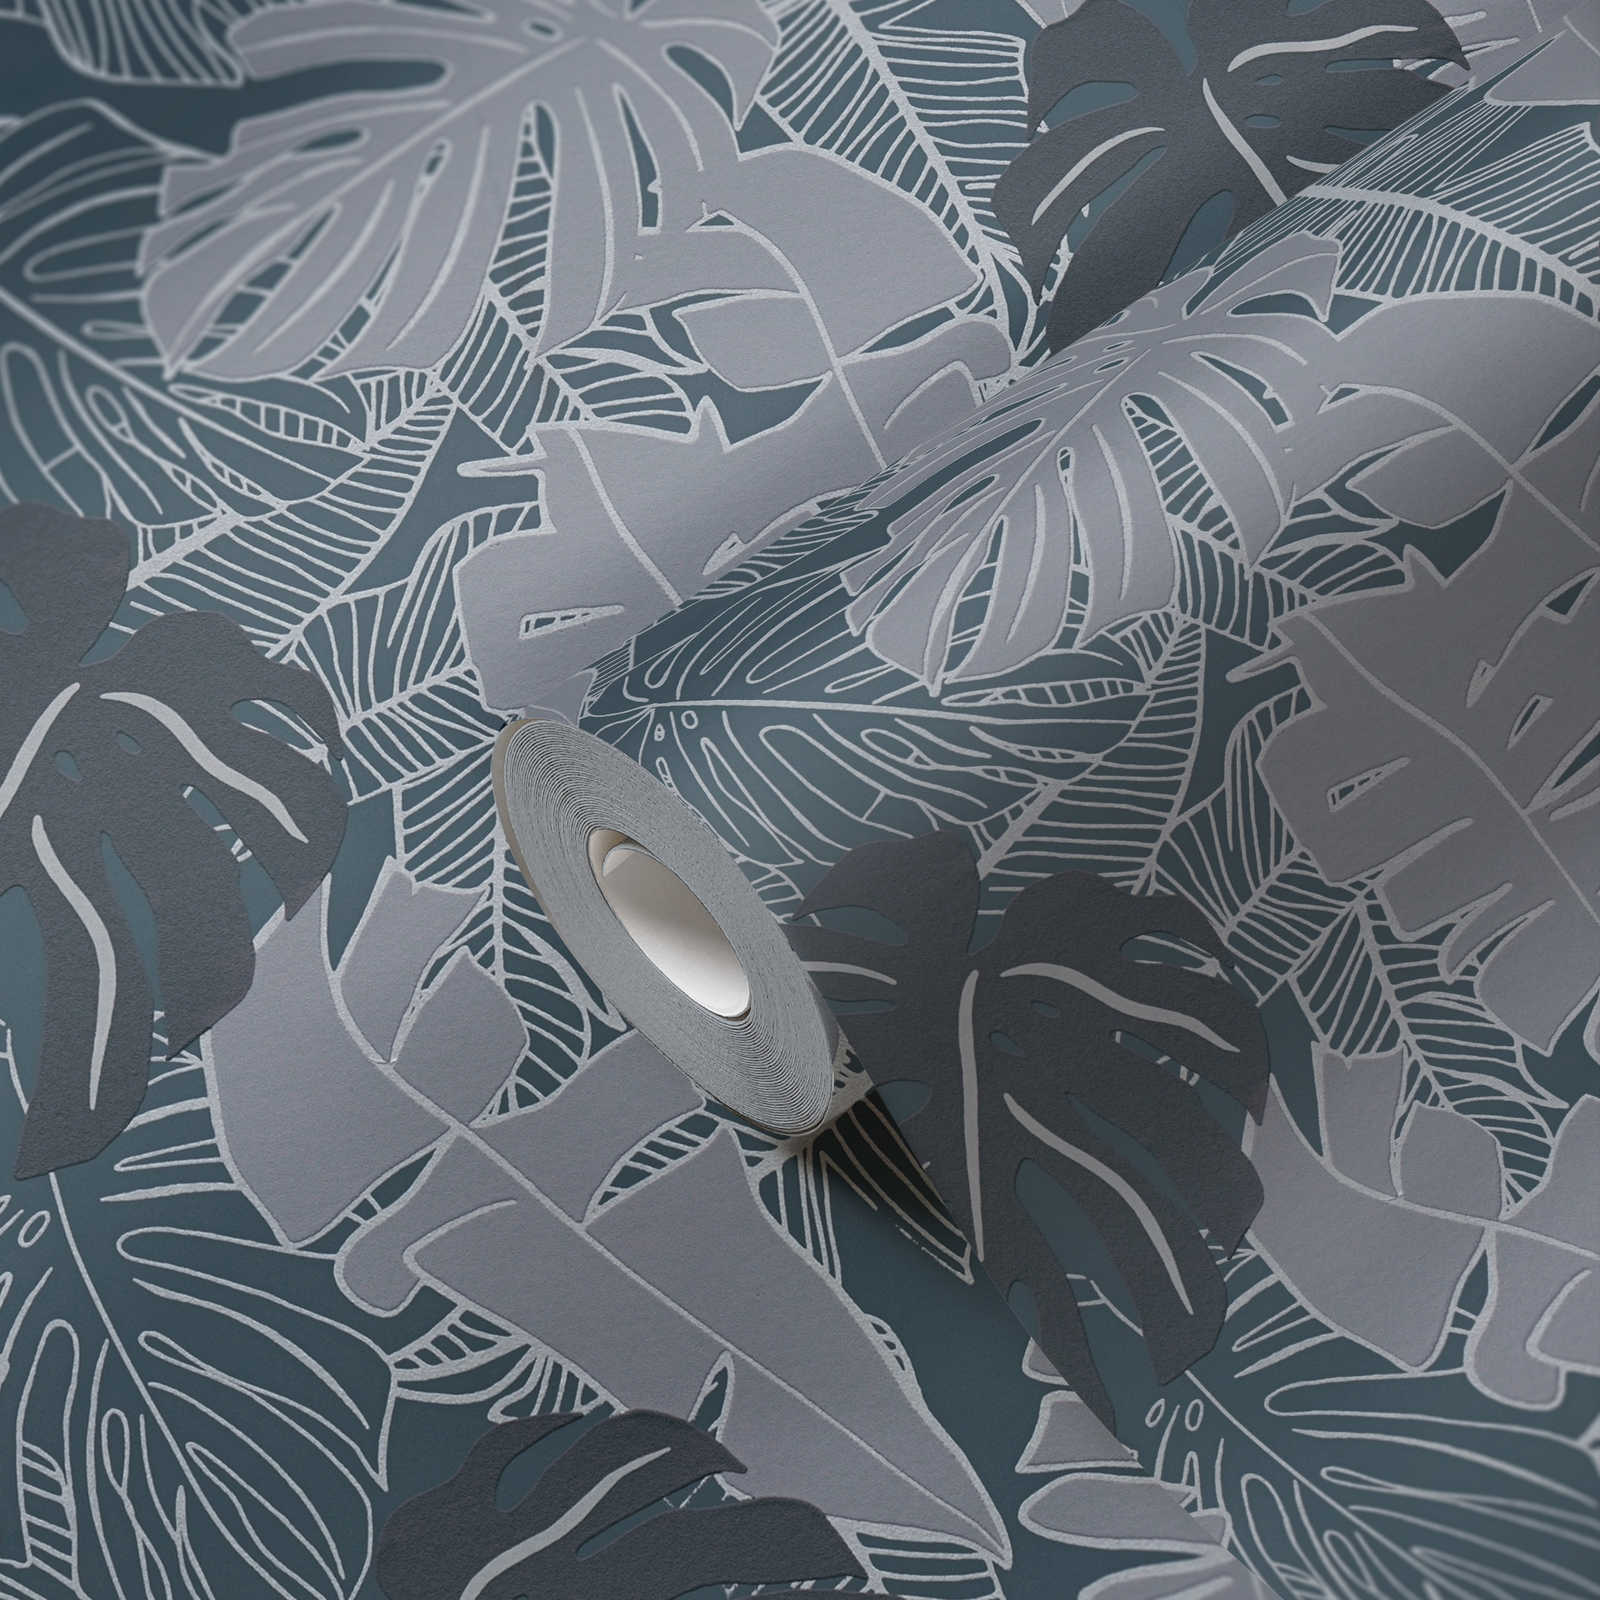             Jungle pattern wallpaper with banana leaves & metallic effect - black, grey
        